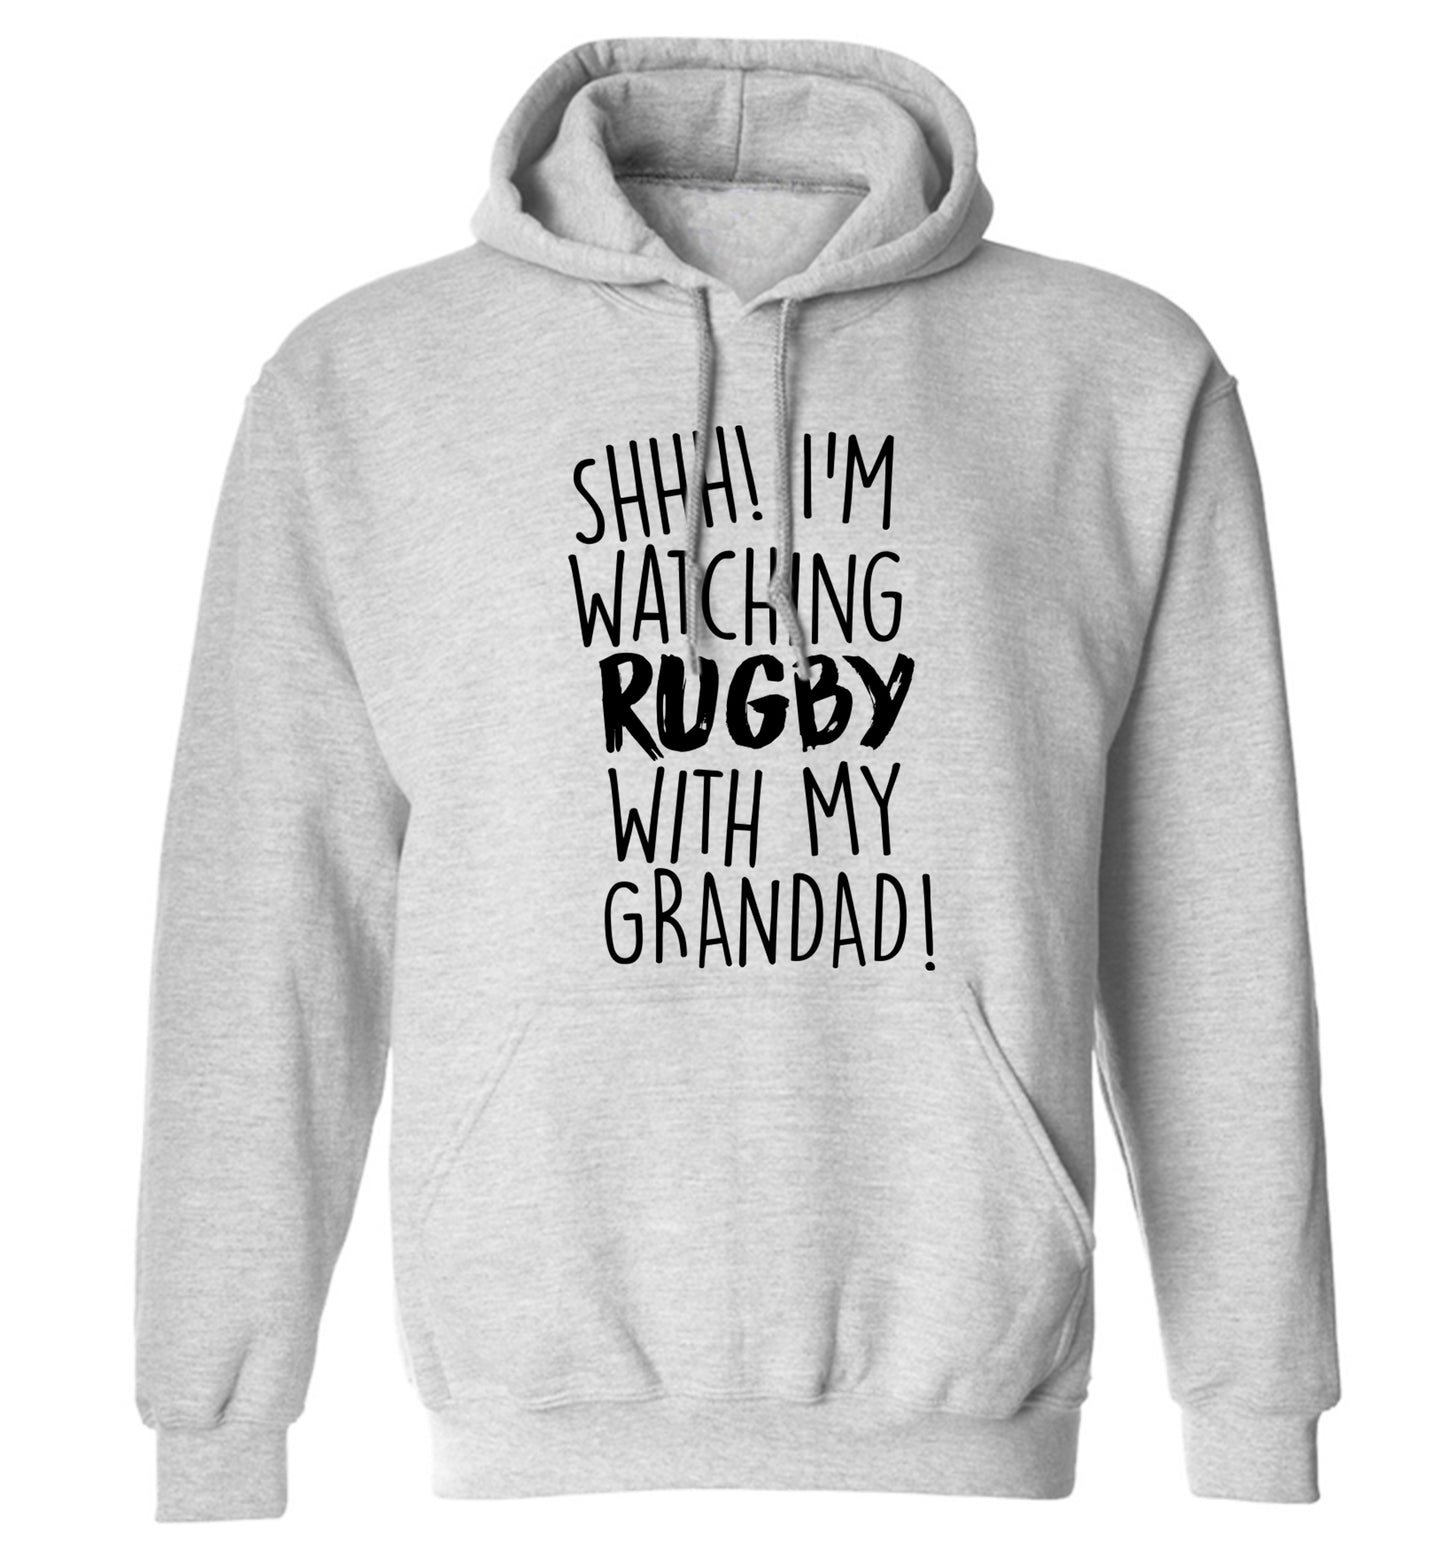 Shh I'm watching rugby with my grandad adults unisex grey hoodie 2XL